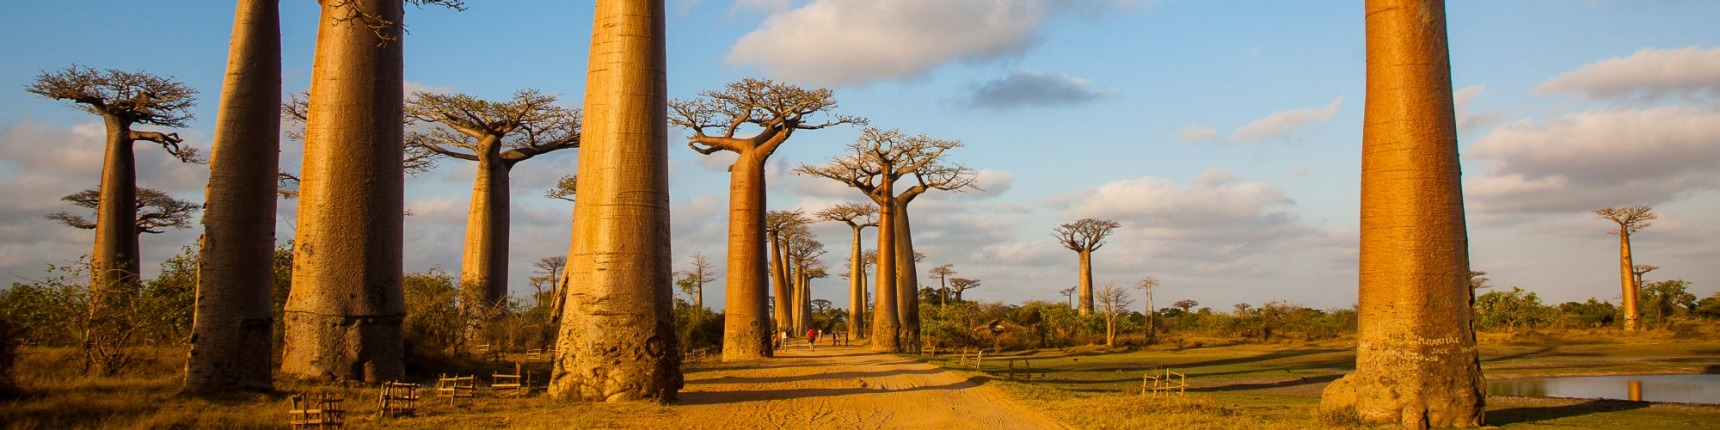 Africa Balboa trees